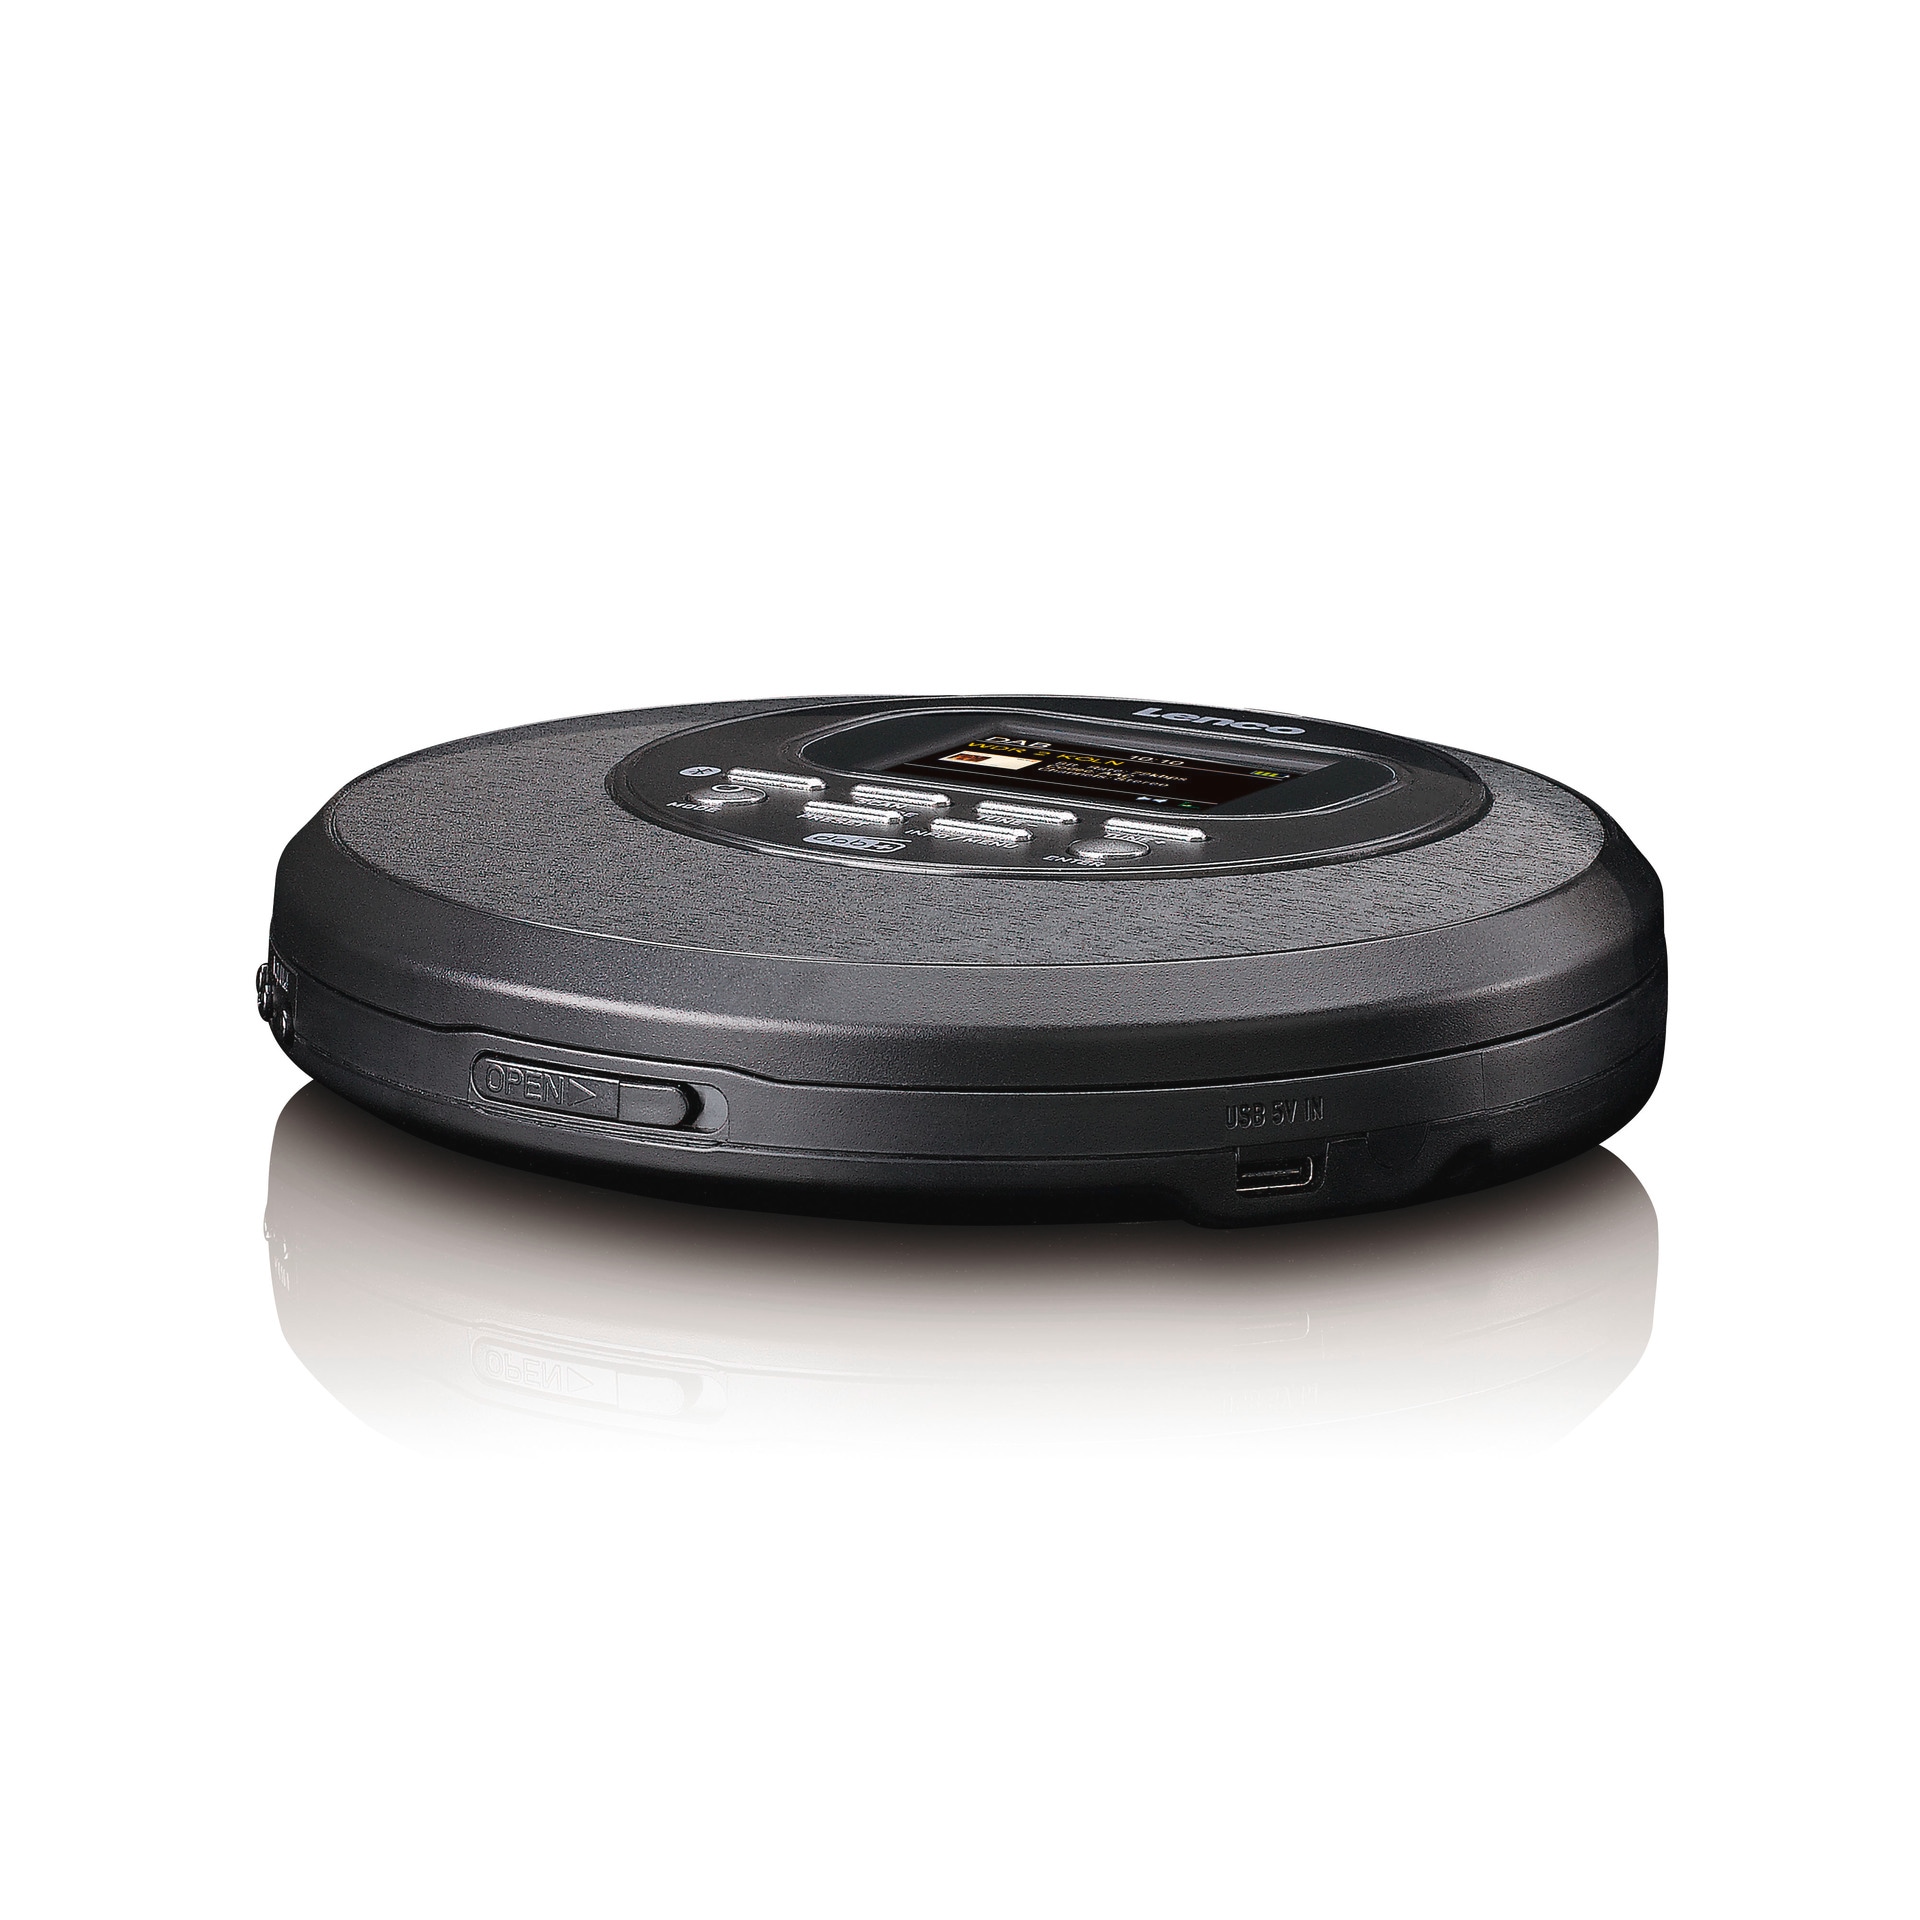 Lenco CD-Player »CD-500 Portabler CD-Player mit DAB+ Radio BT Akku«, Bluetooth, UKW Radio